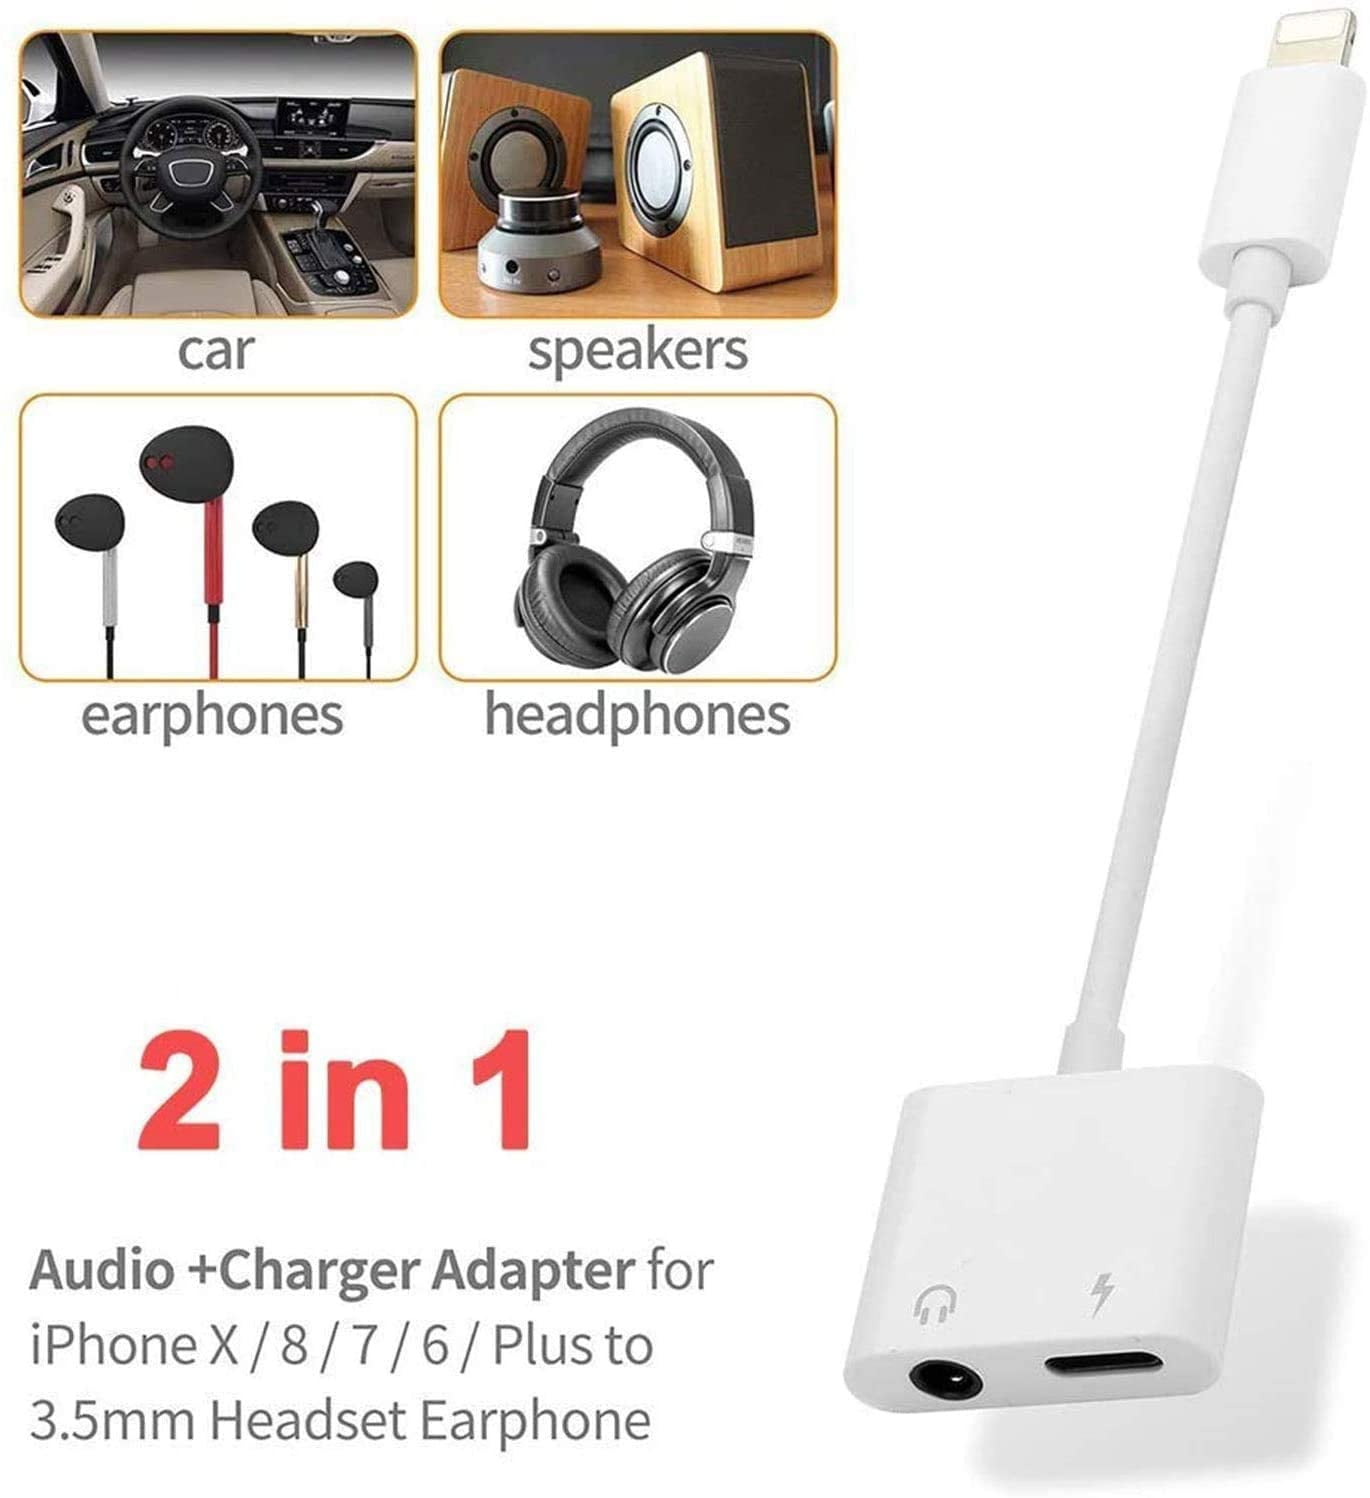 Power Up Double Jack Apple Headphone Adapter - 192-63400